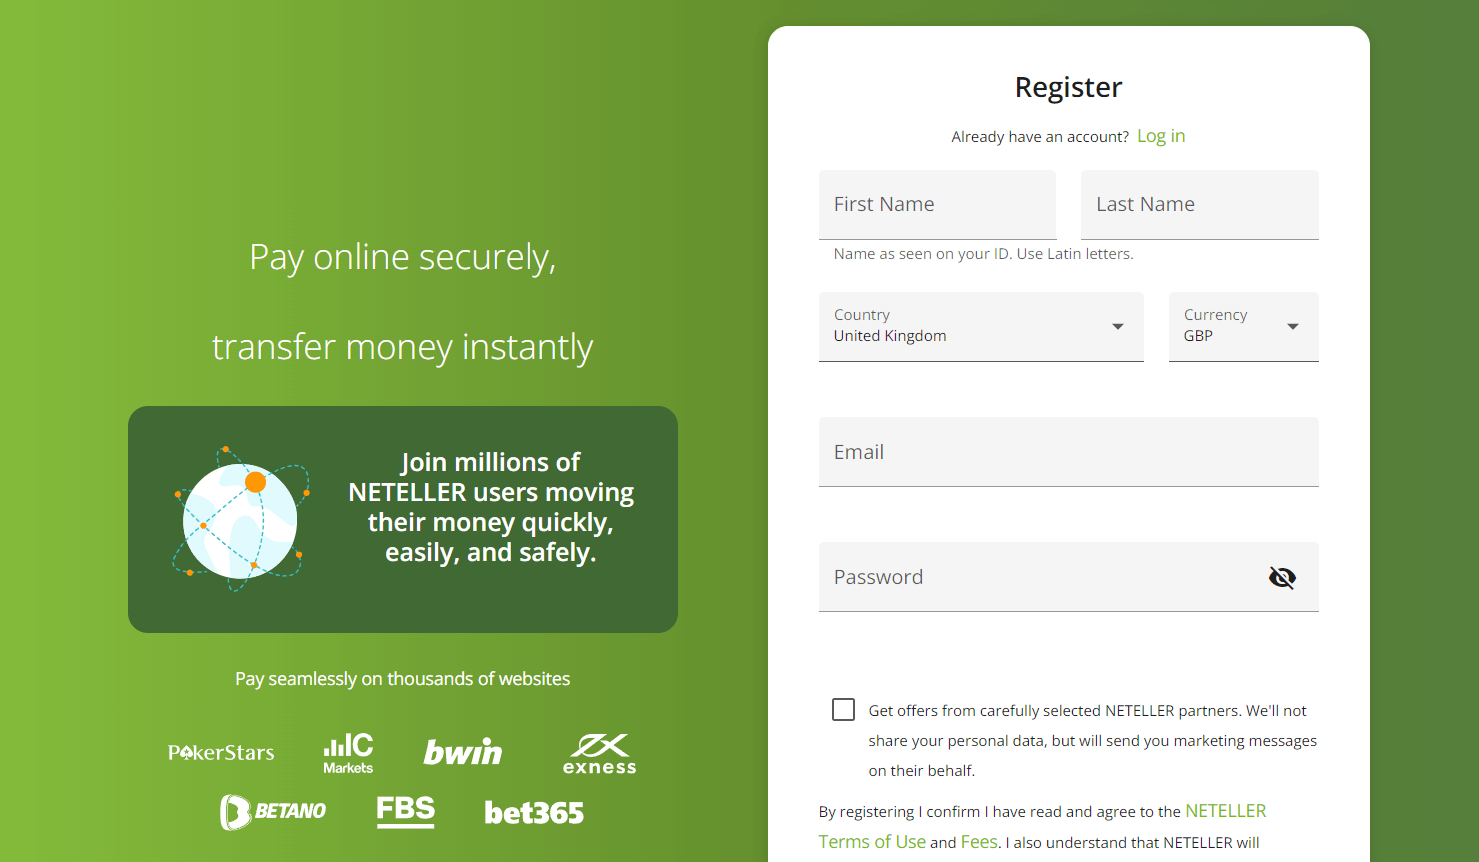 Start the registration process